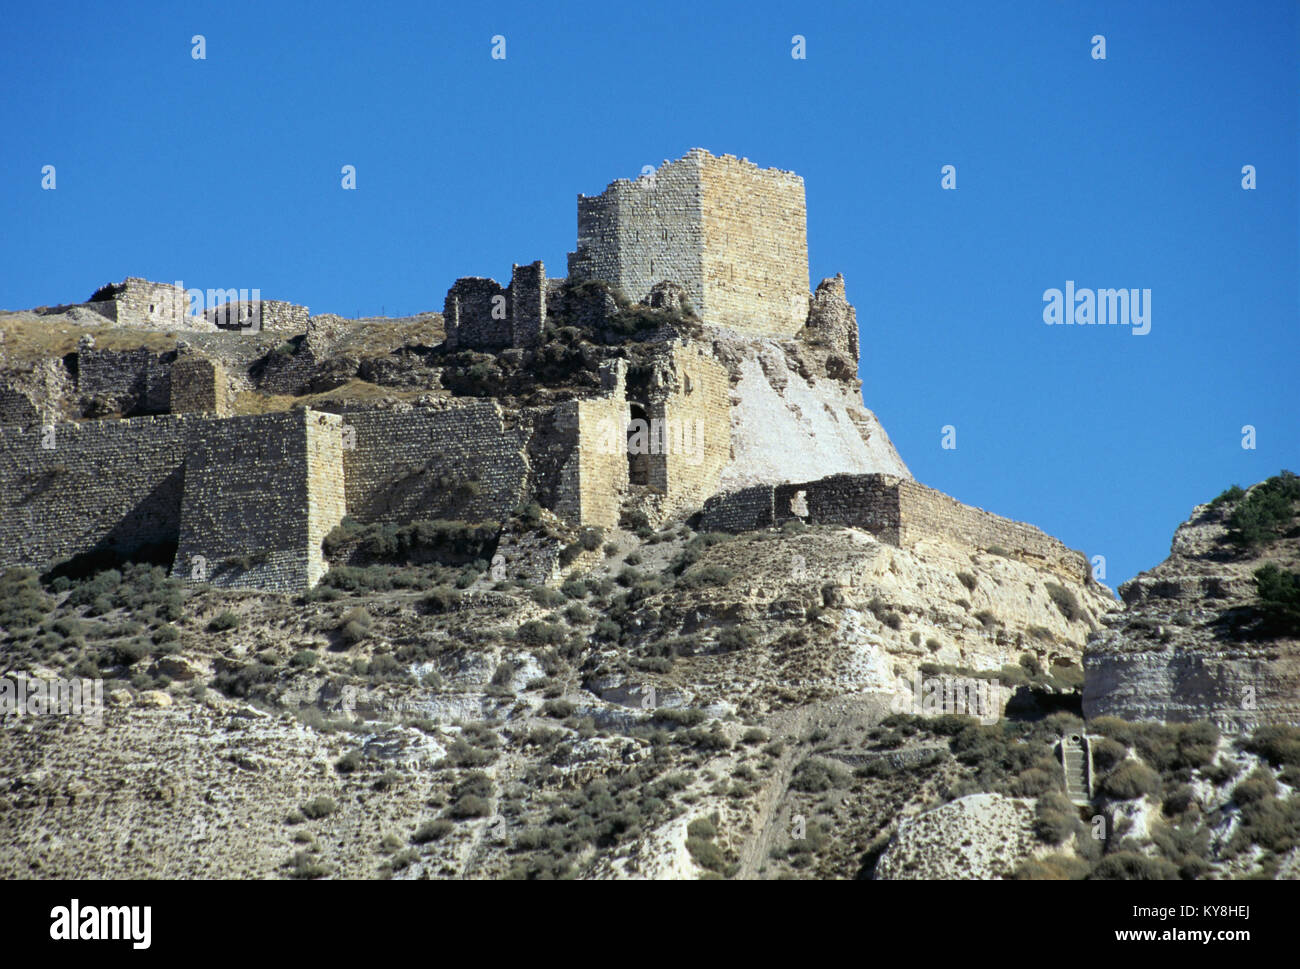 2216. Crusader Castle (1132AD), Kerak, Kerak Gov, Jordan Stock Photo